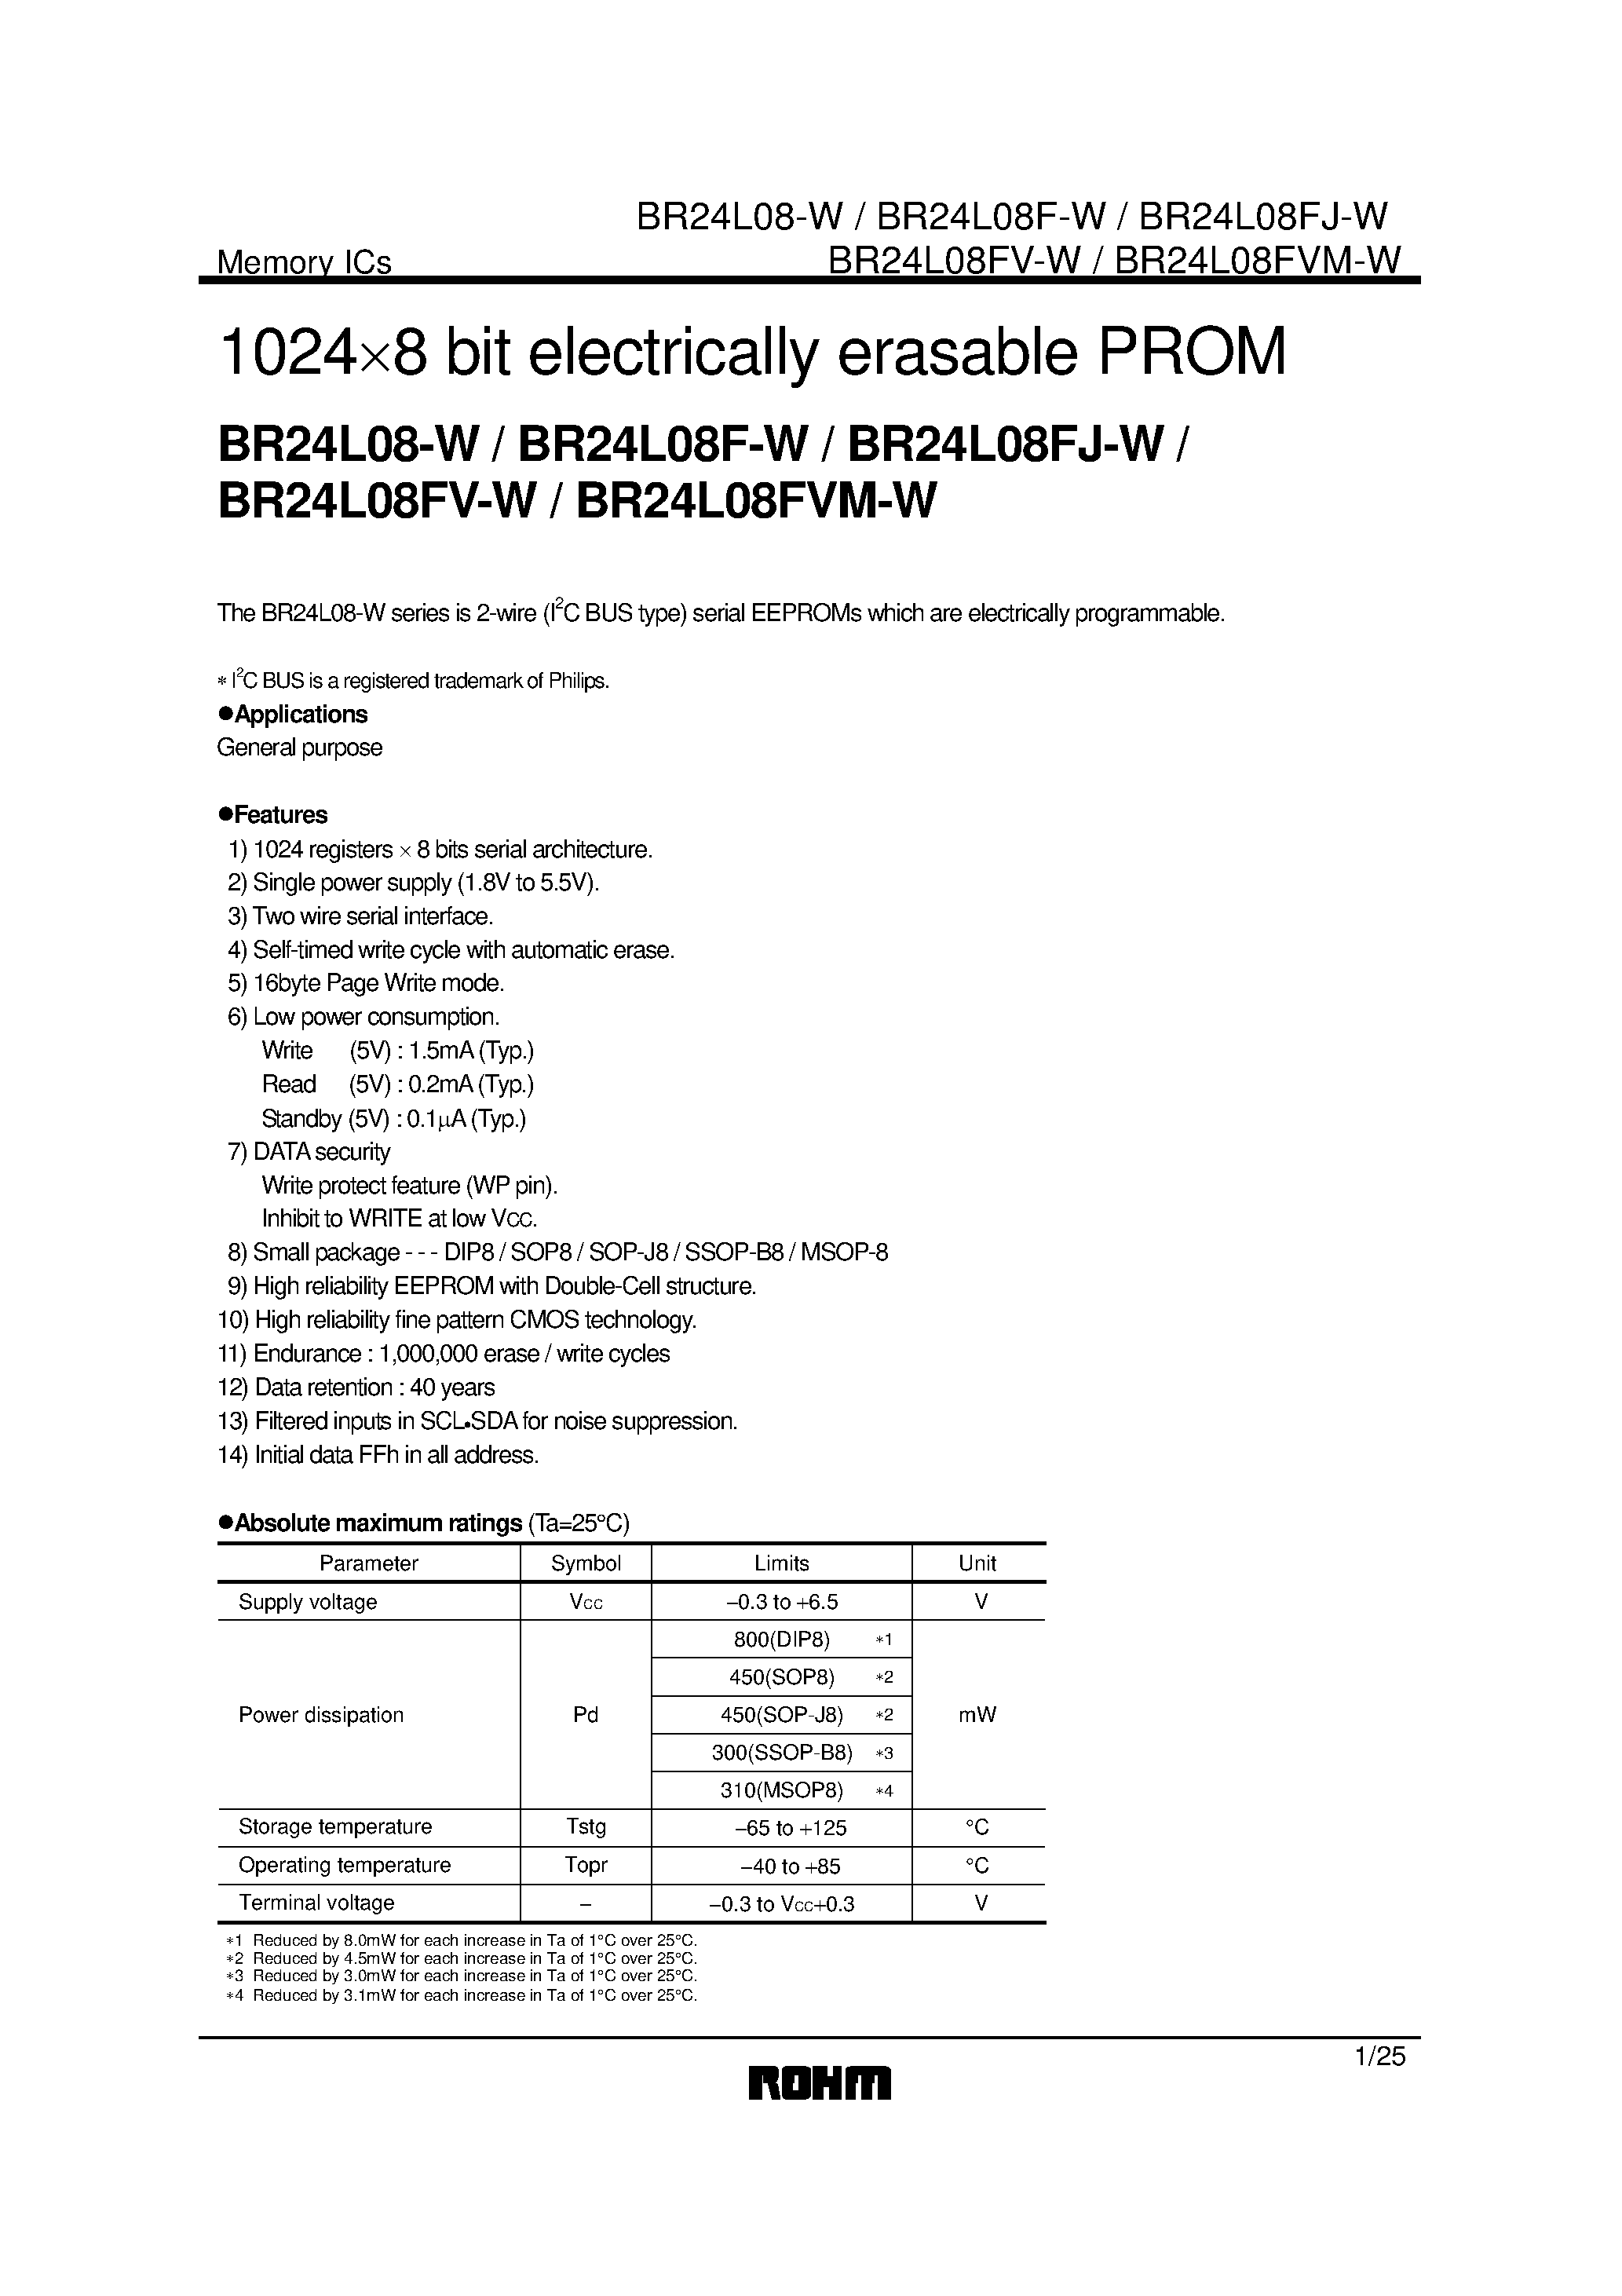 Datasheet BR24L08-W - 10248 bit electrically erasable PROM page 1